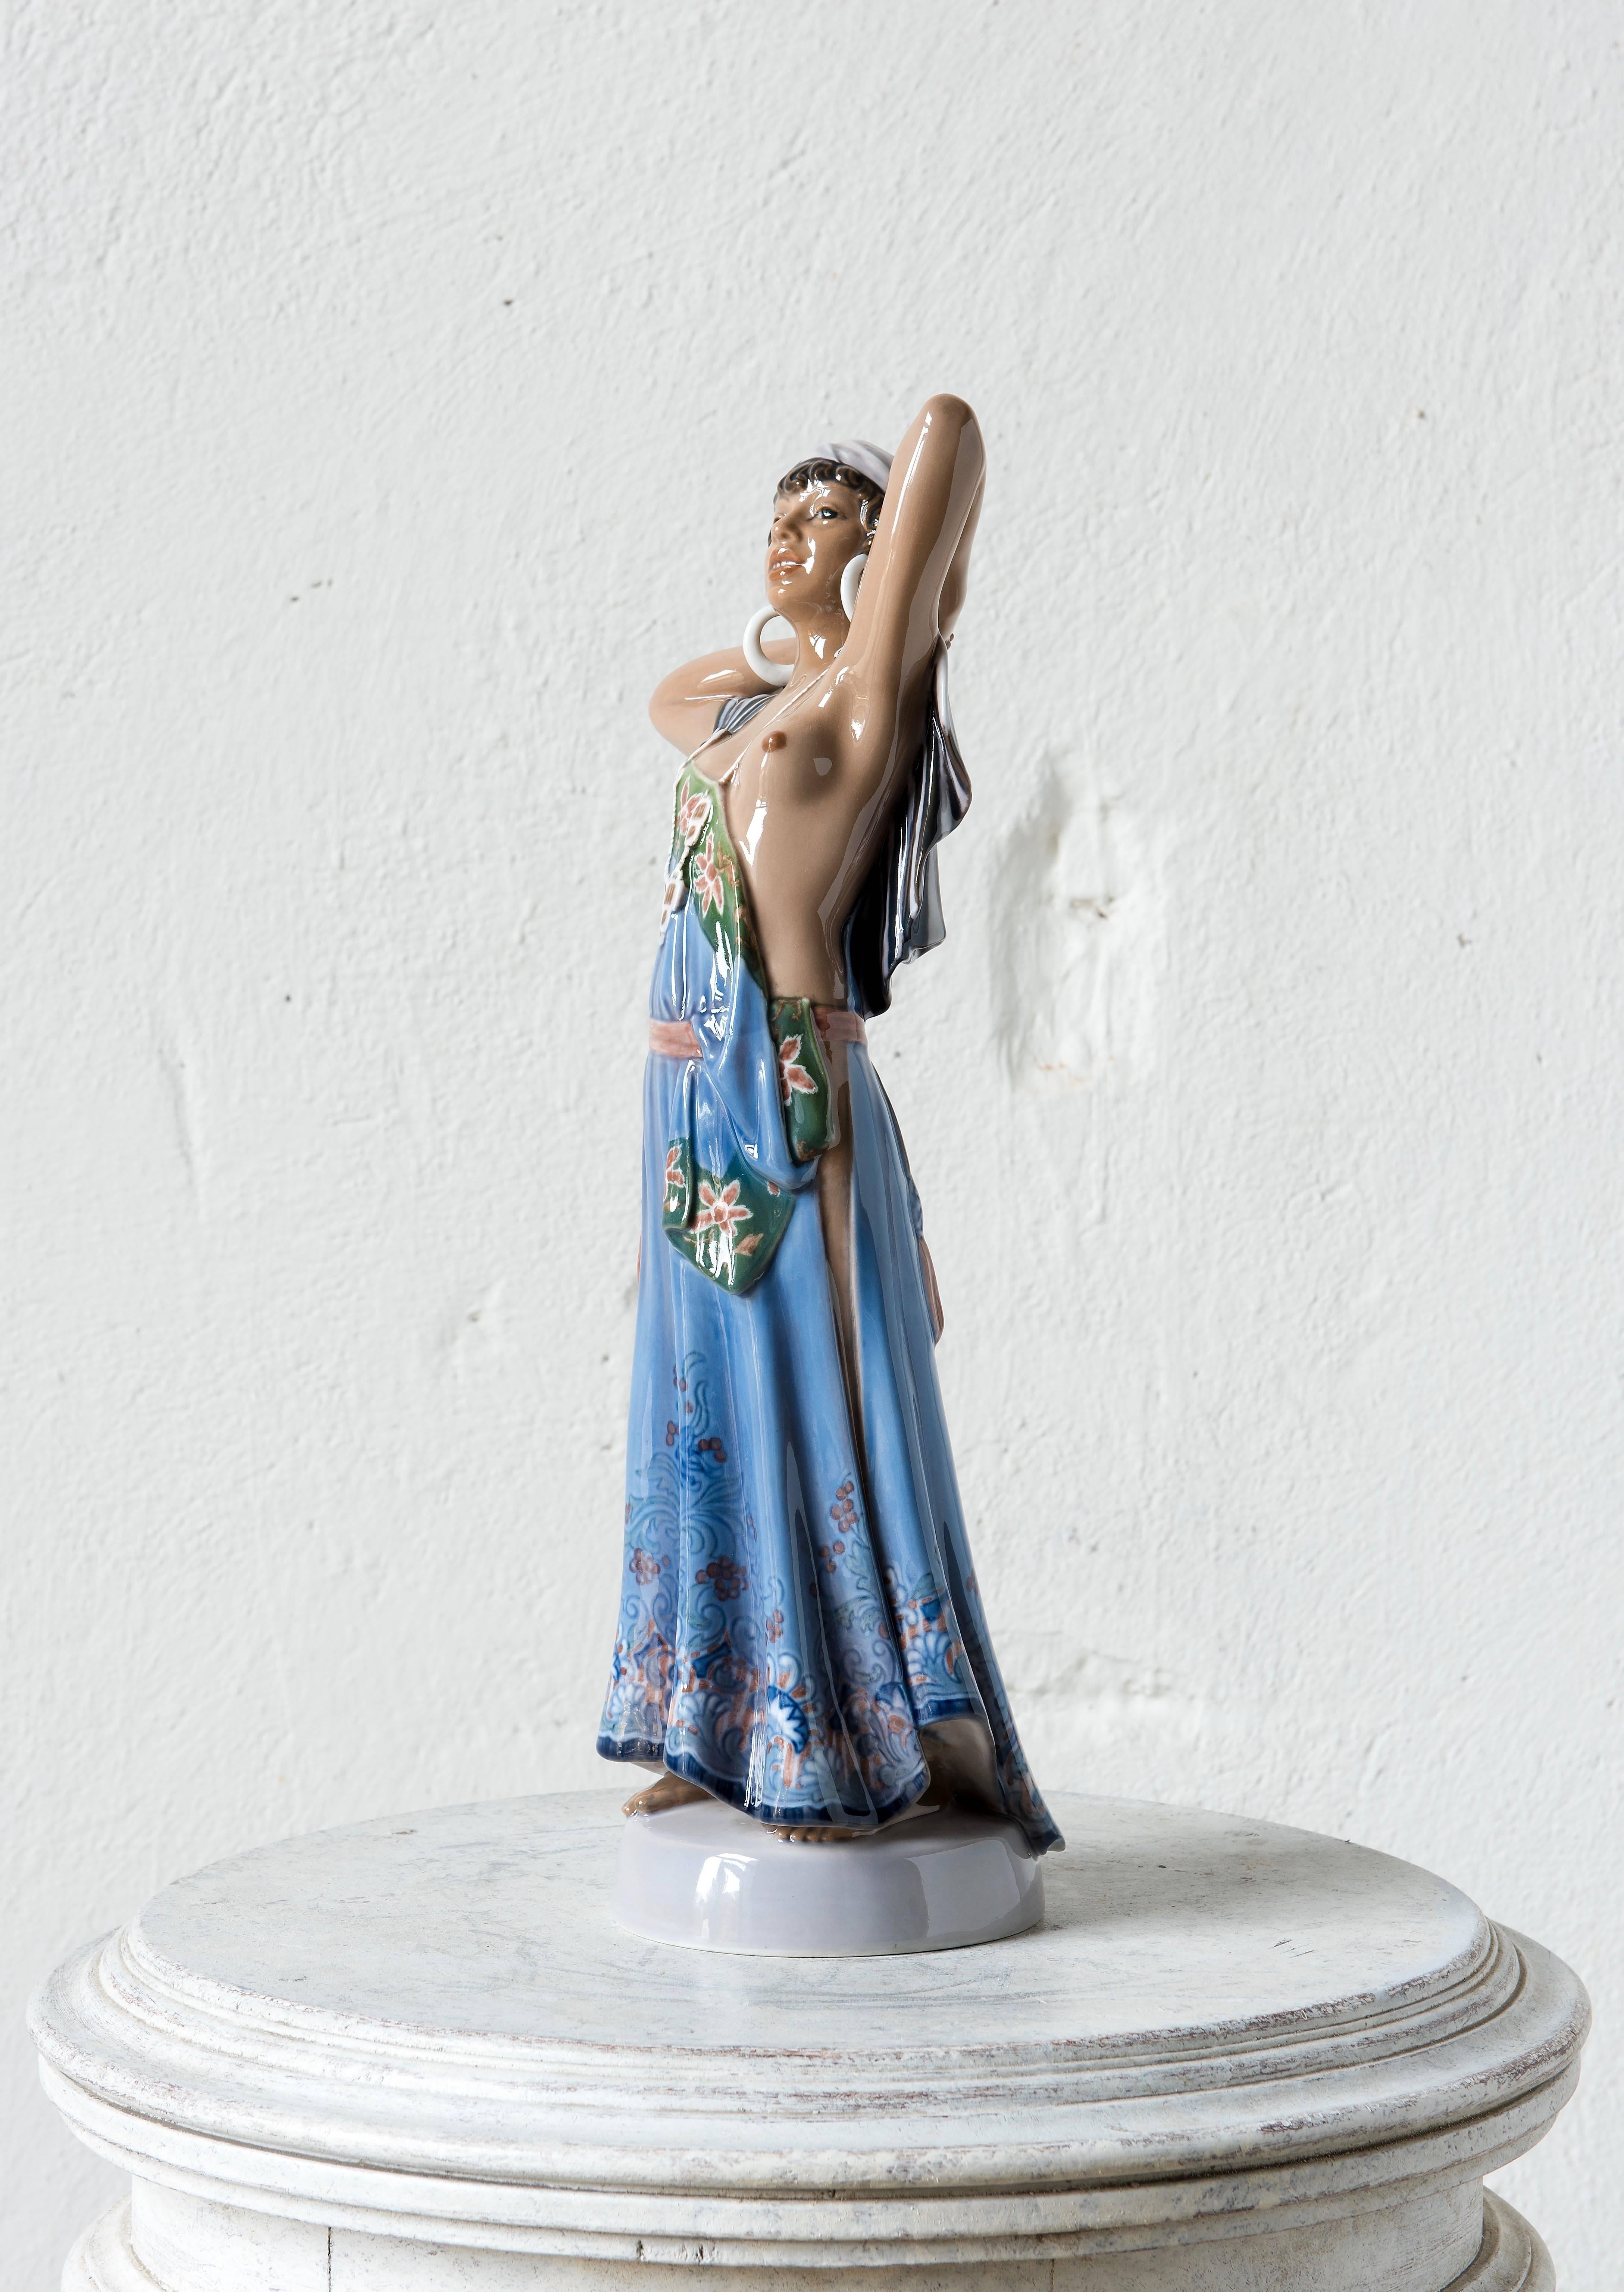 Dahl Jensen figurine in porcelain Denmark No. 1129 1st Factory
Top quality figurine in shape of 